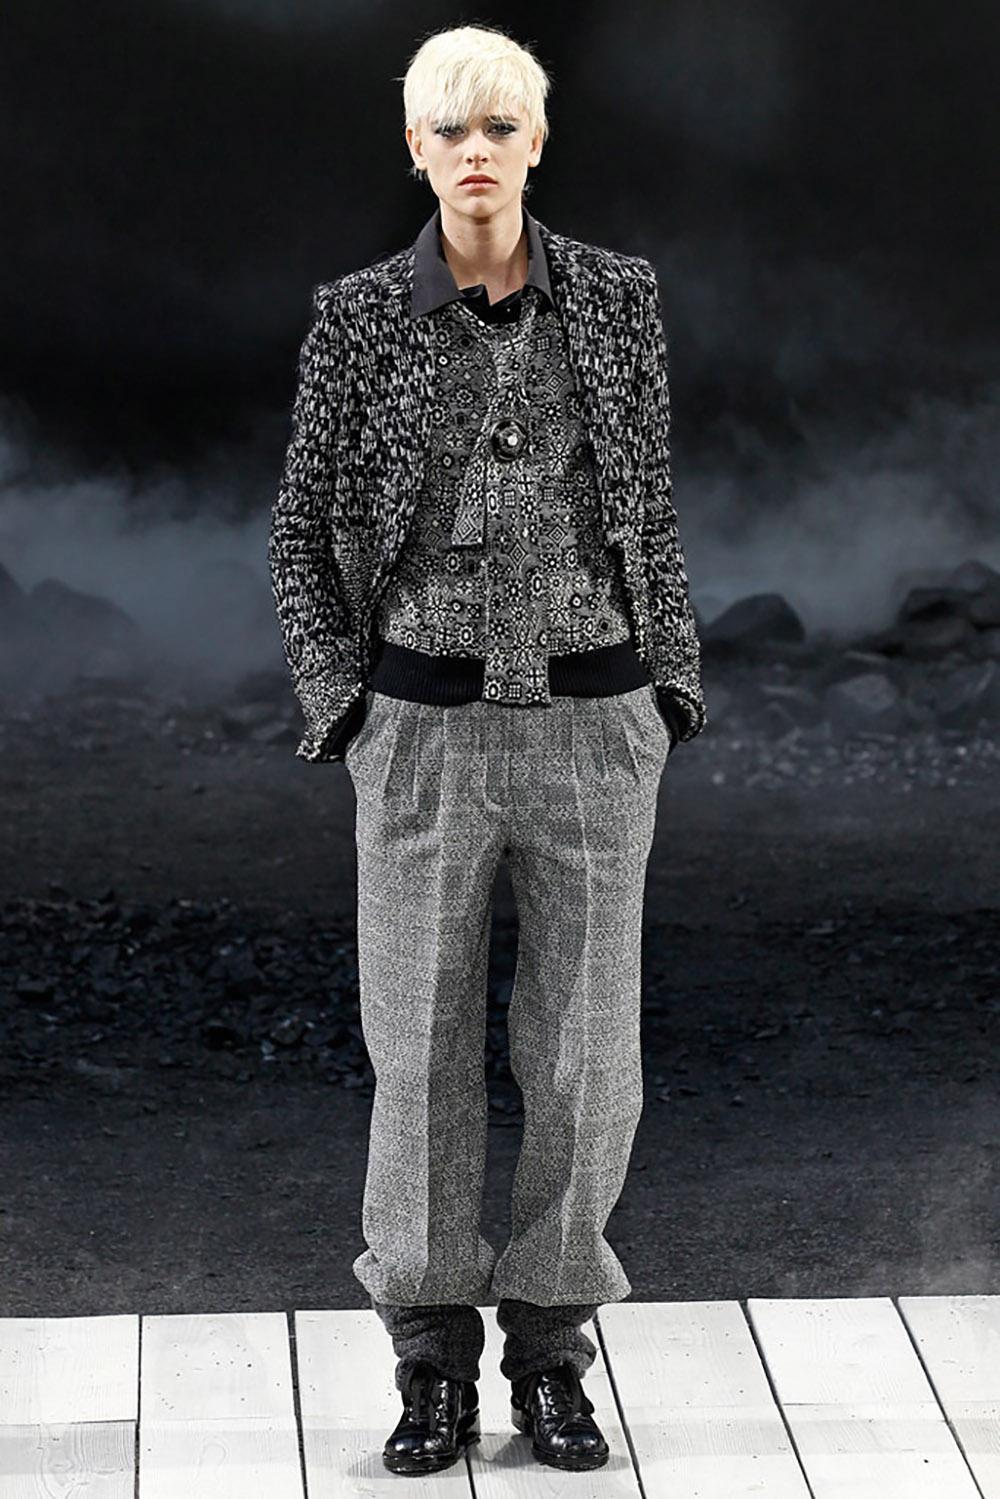 Chanel black tweed jacket with CC logo charm at waist.
Size mark 40 FR. Pristine condition
- signature braided metallic trim
- iconic 4-pockets silhouette
- tonal silk lining
